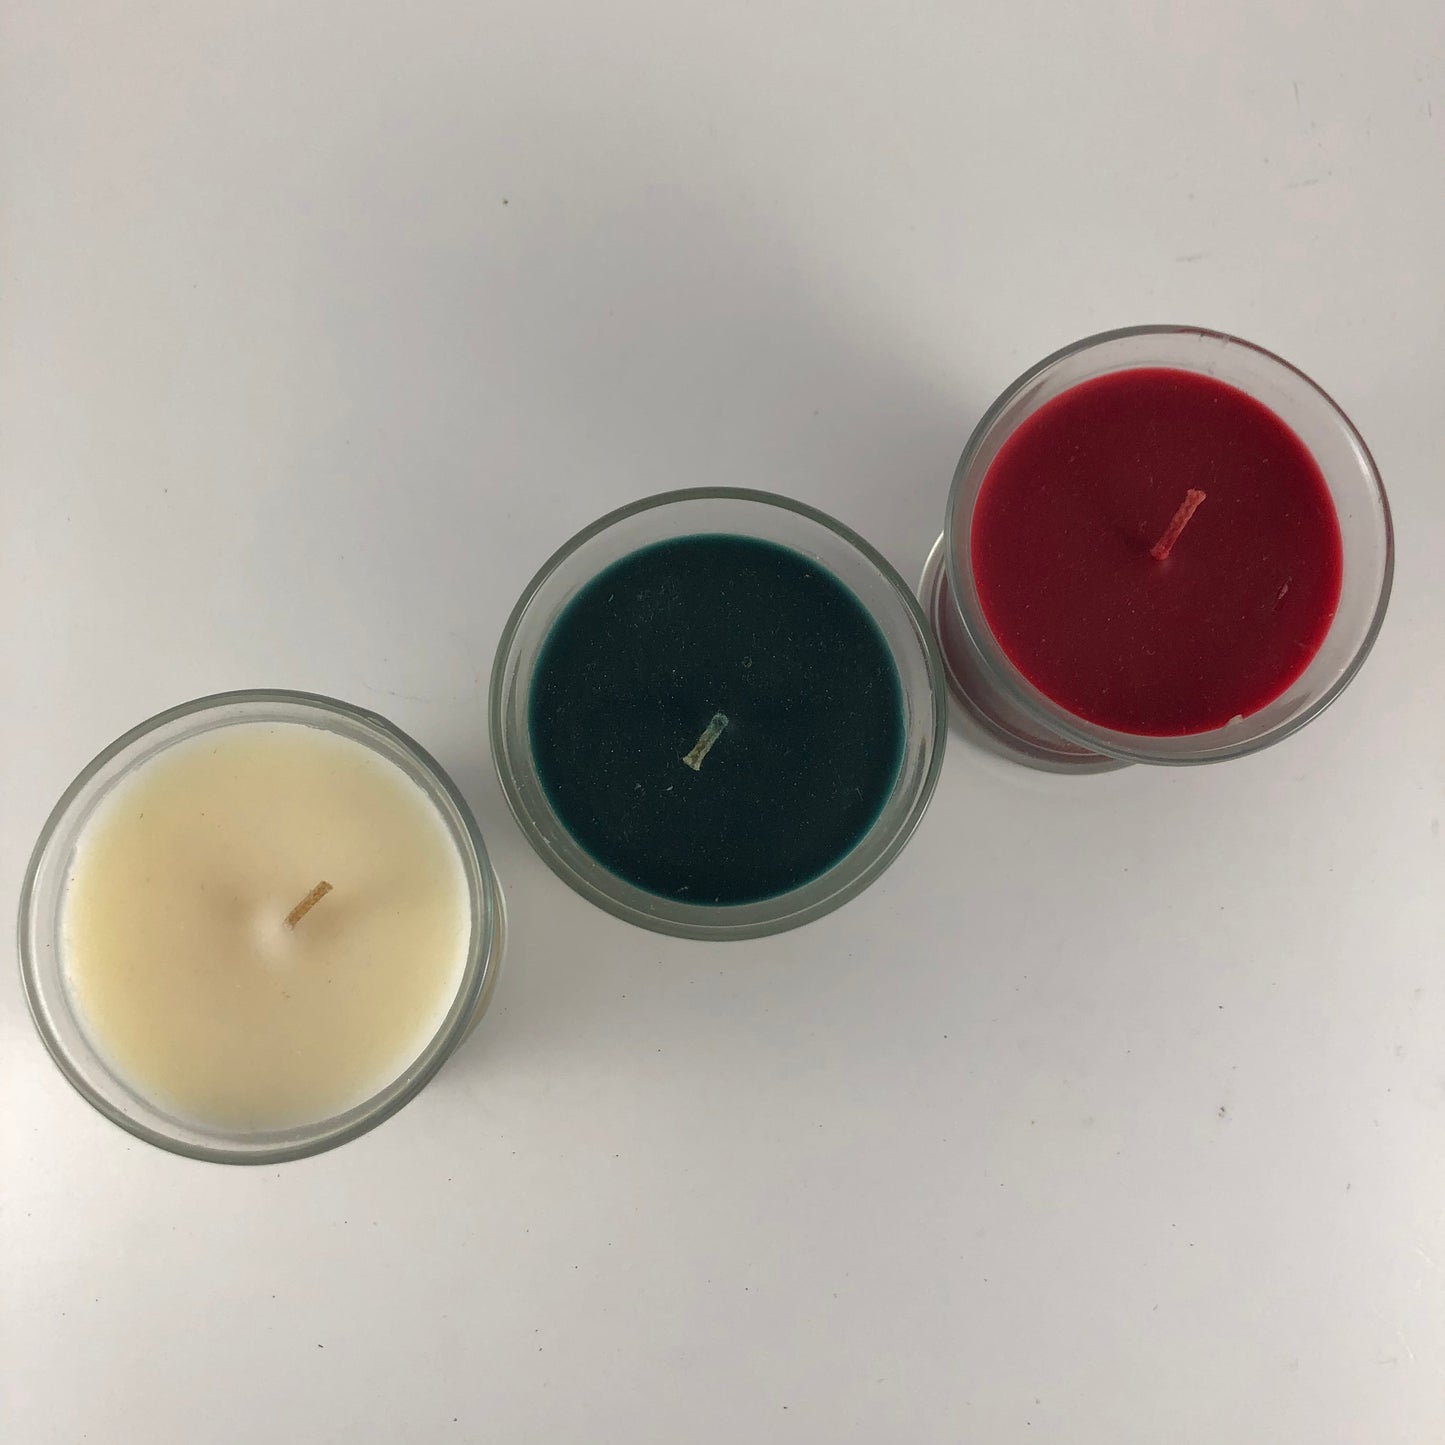 P9574 - Trio de mini bougies en pot hivernales